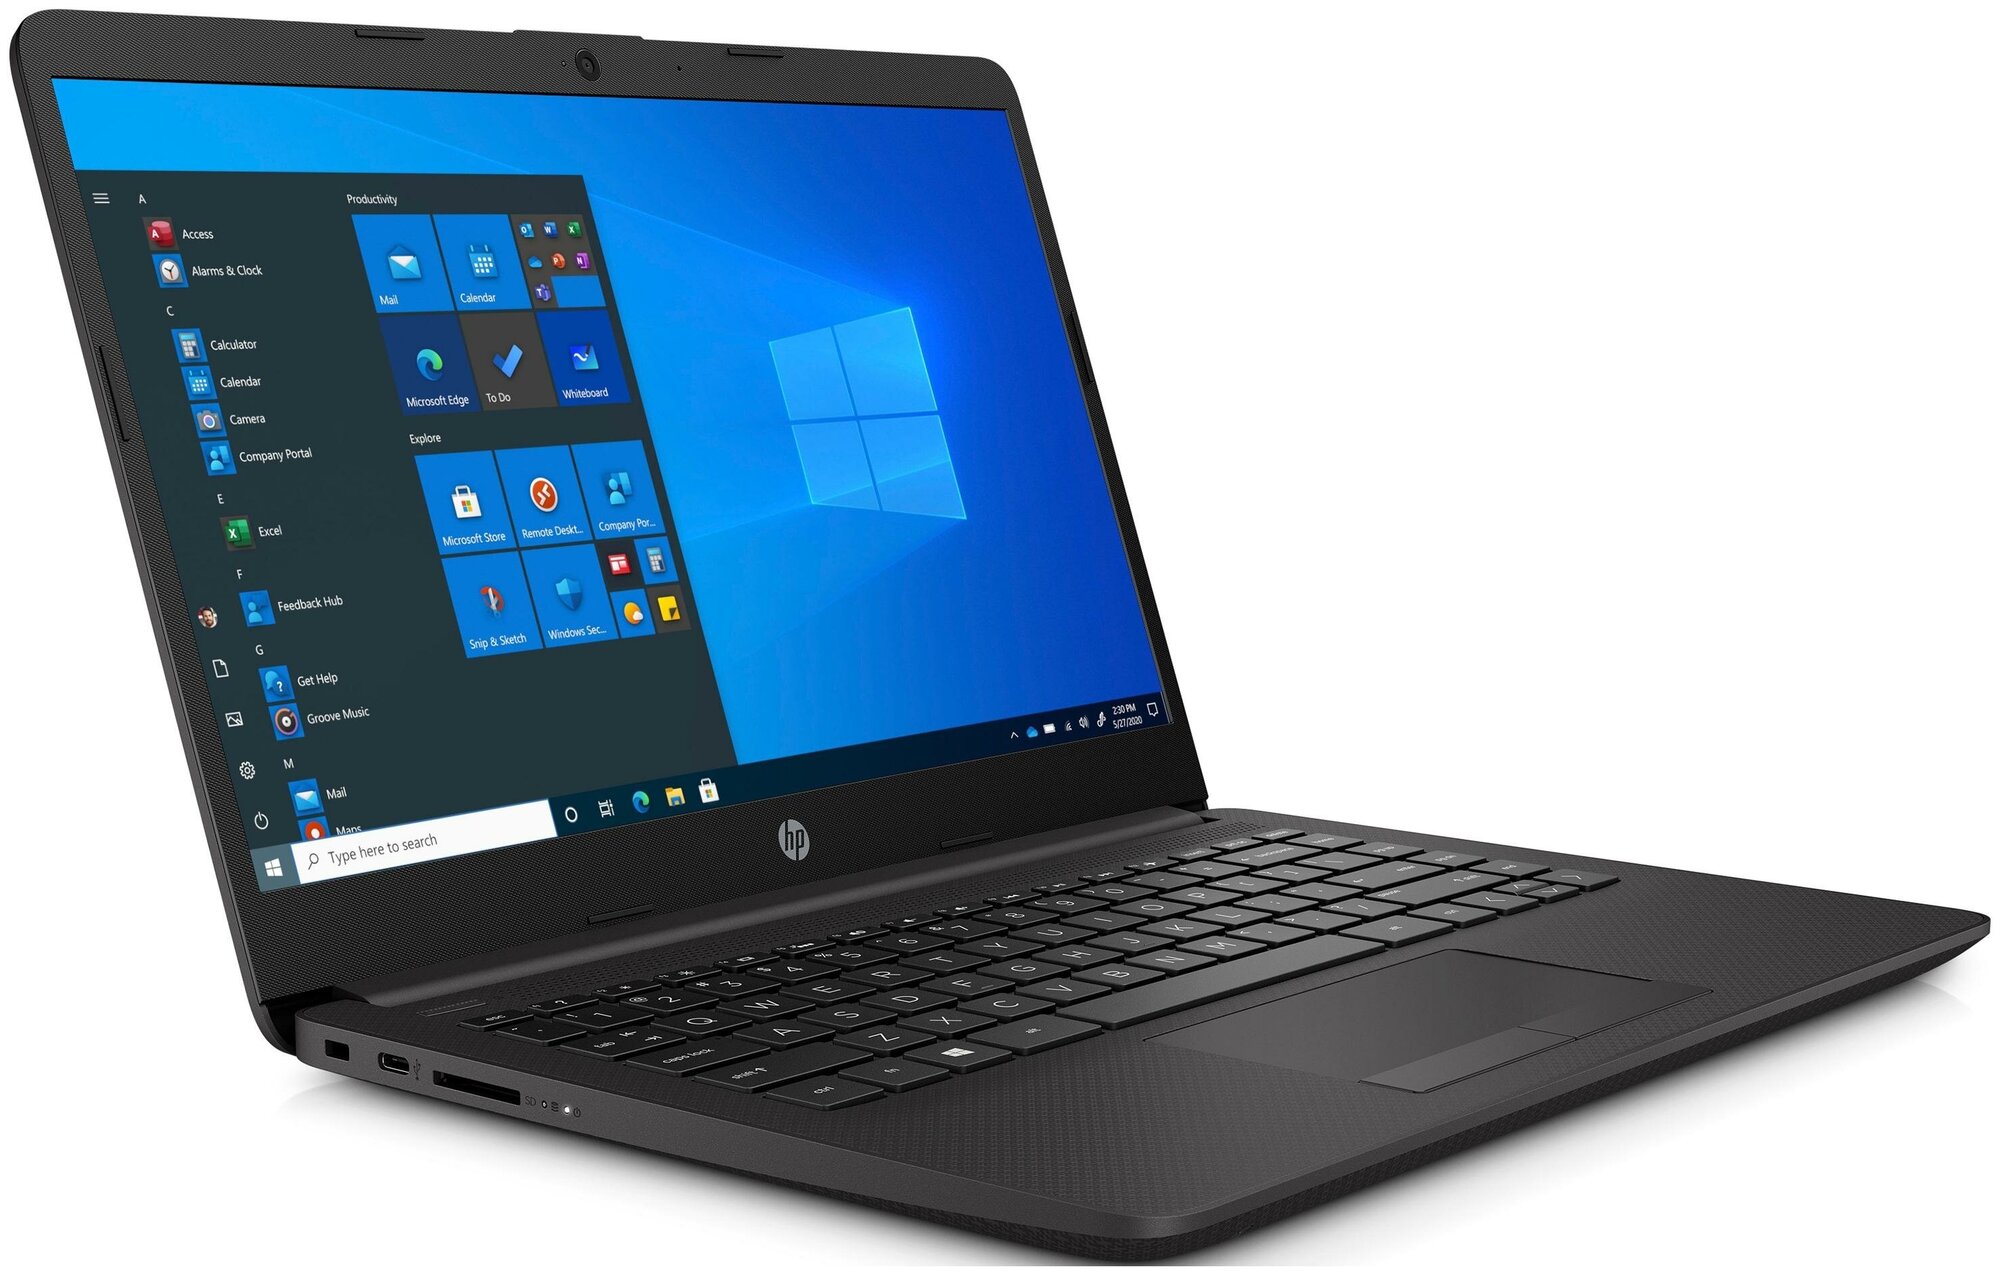 Ноутбук HP 245 G8 (32M44EA)